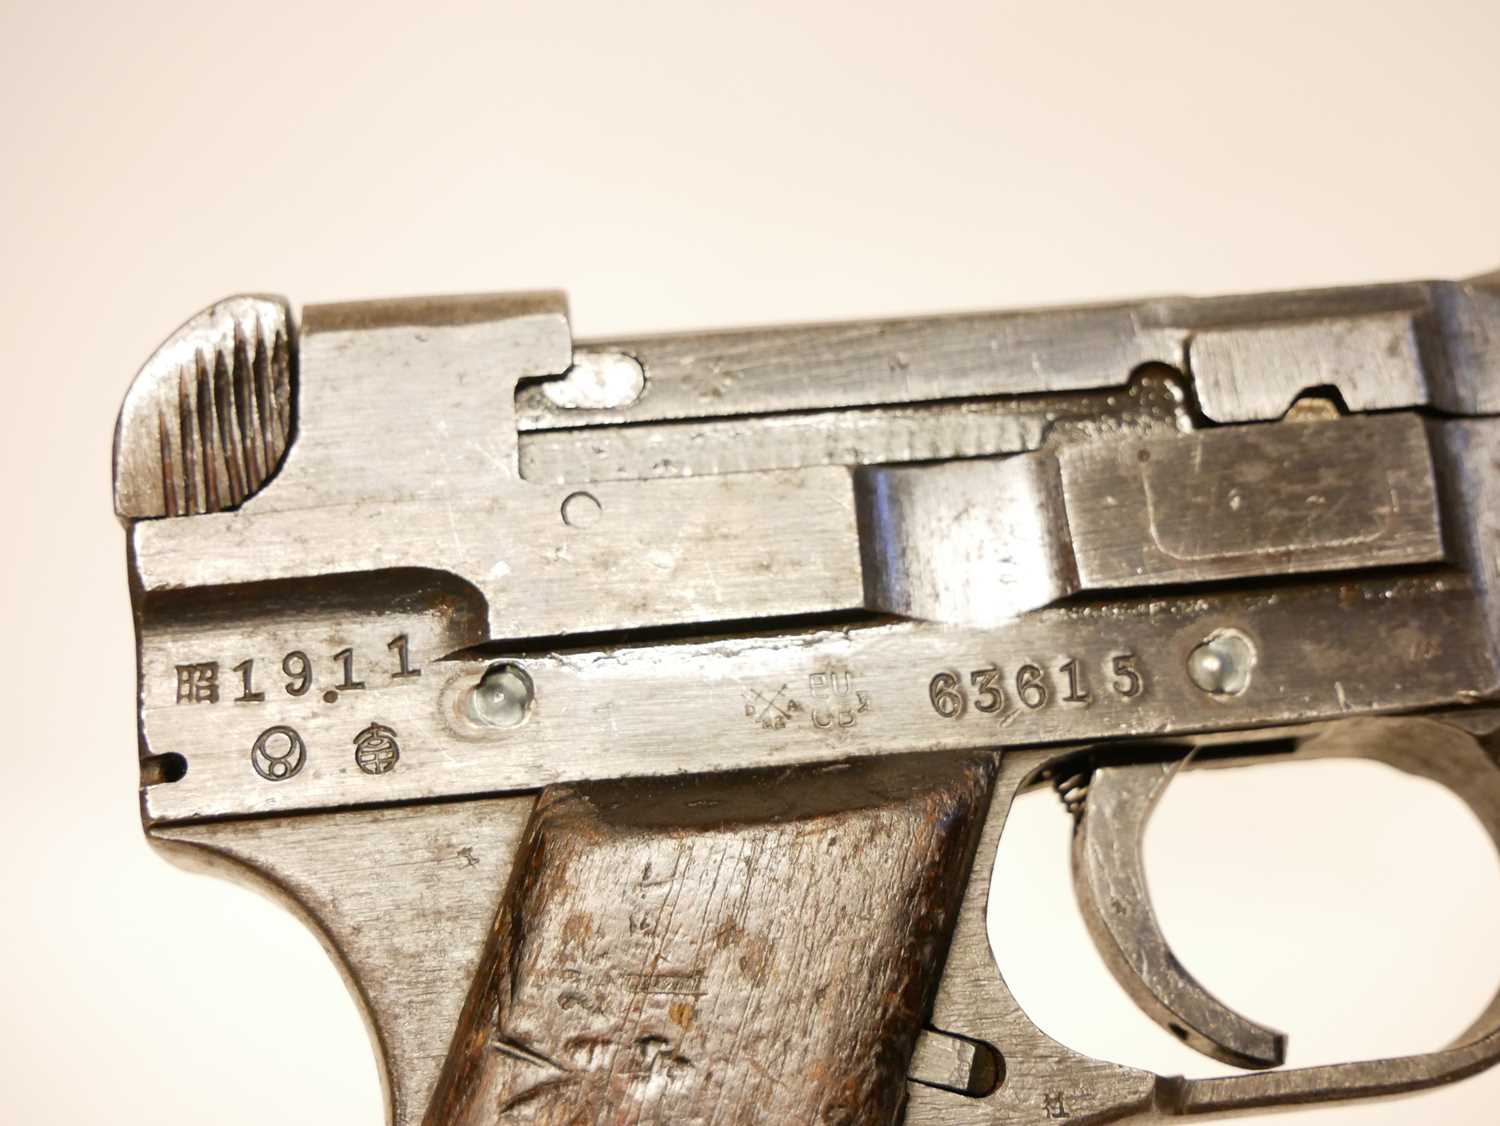 Deactivated Nambu 8mm semi automatic pistol 63615 - Image 9 of 10